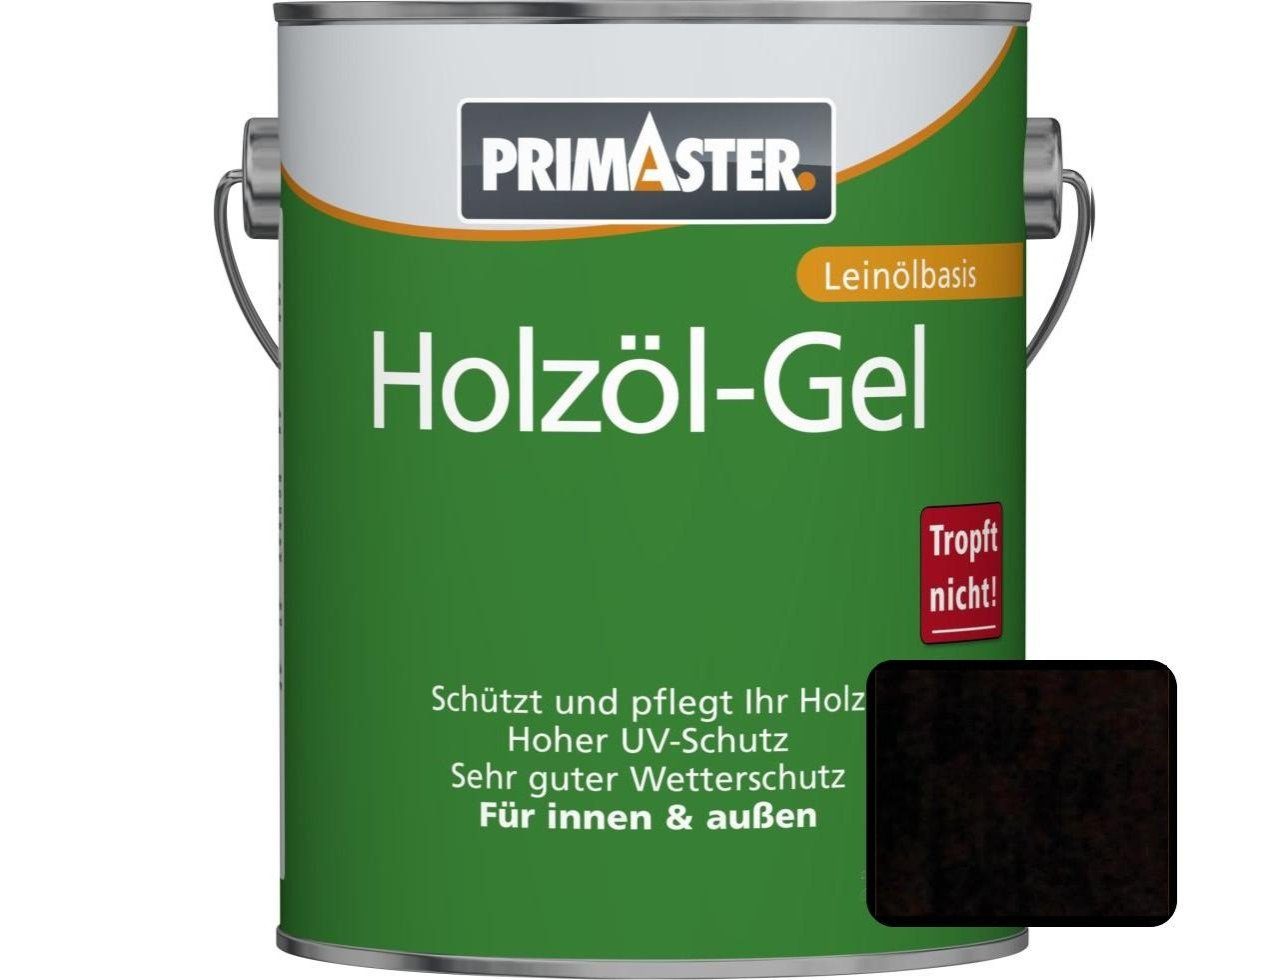 Primaster Hartholzöl Primaster Holzöl-Gel 2,5 L palisander